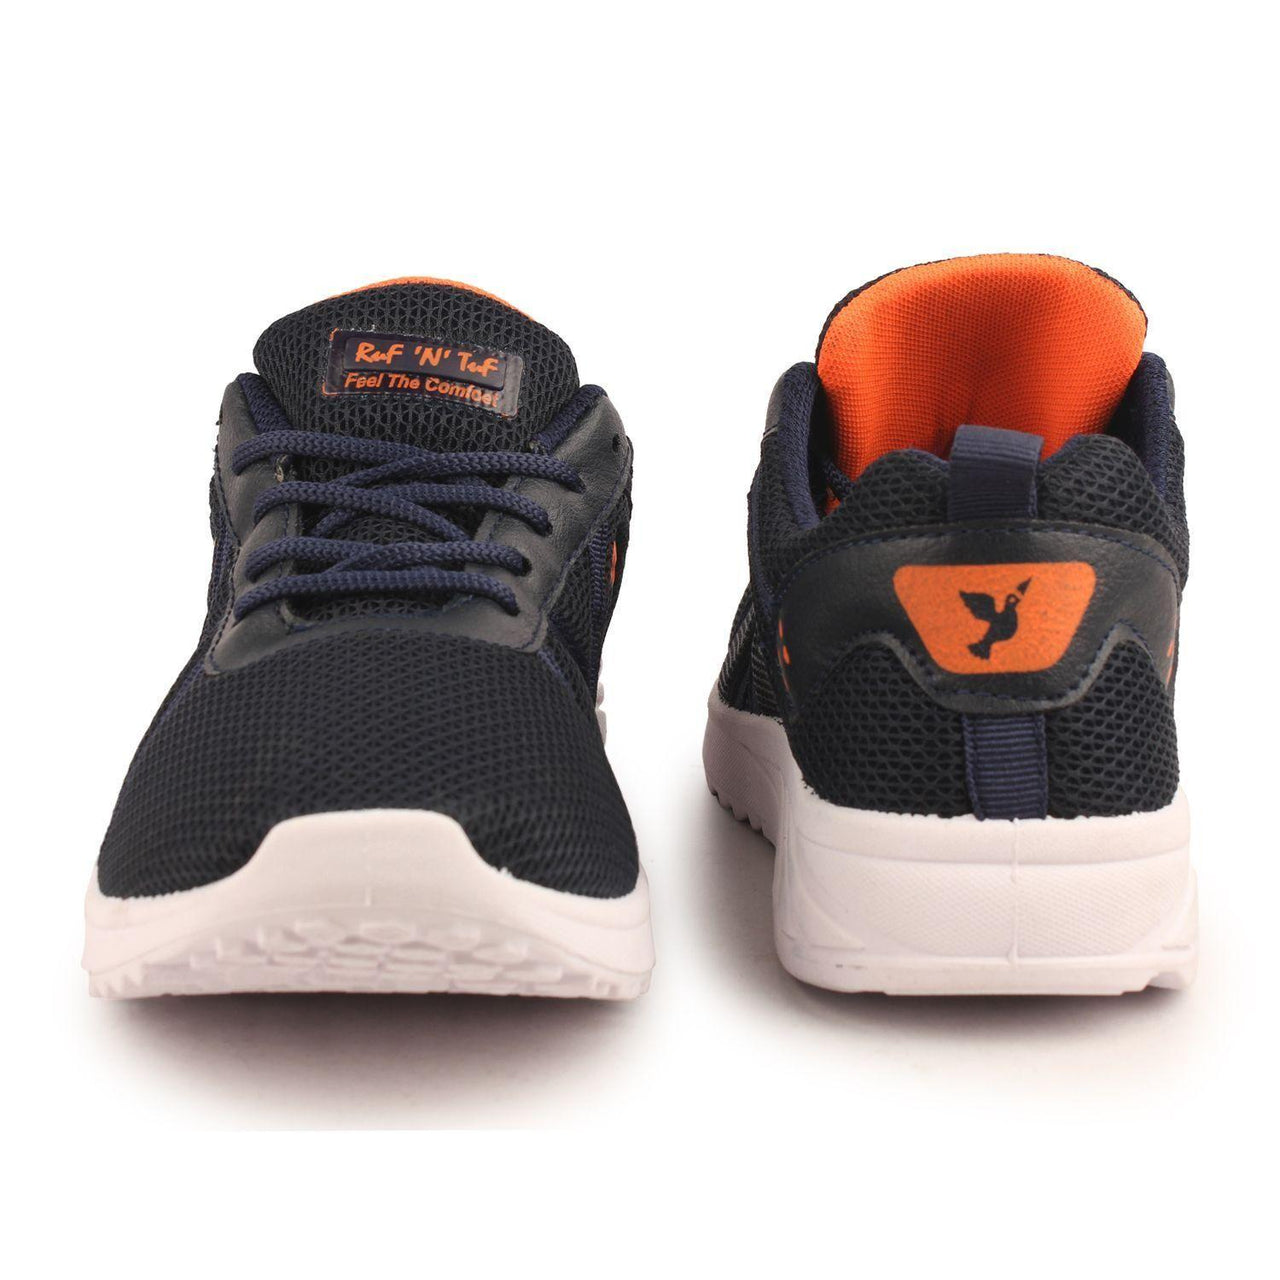 Monex New Latest Black-Orange Shoes For Mens